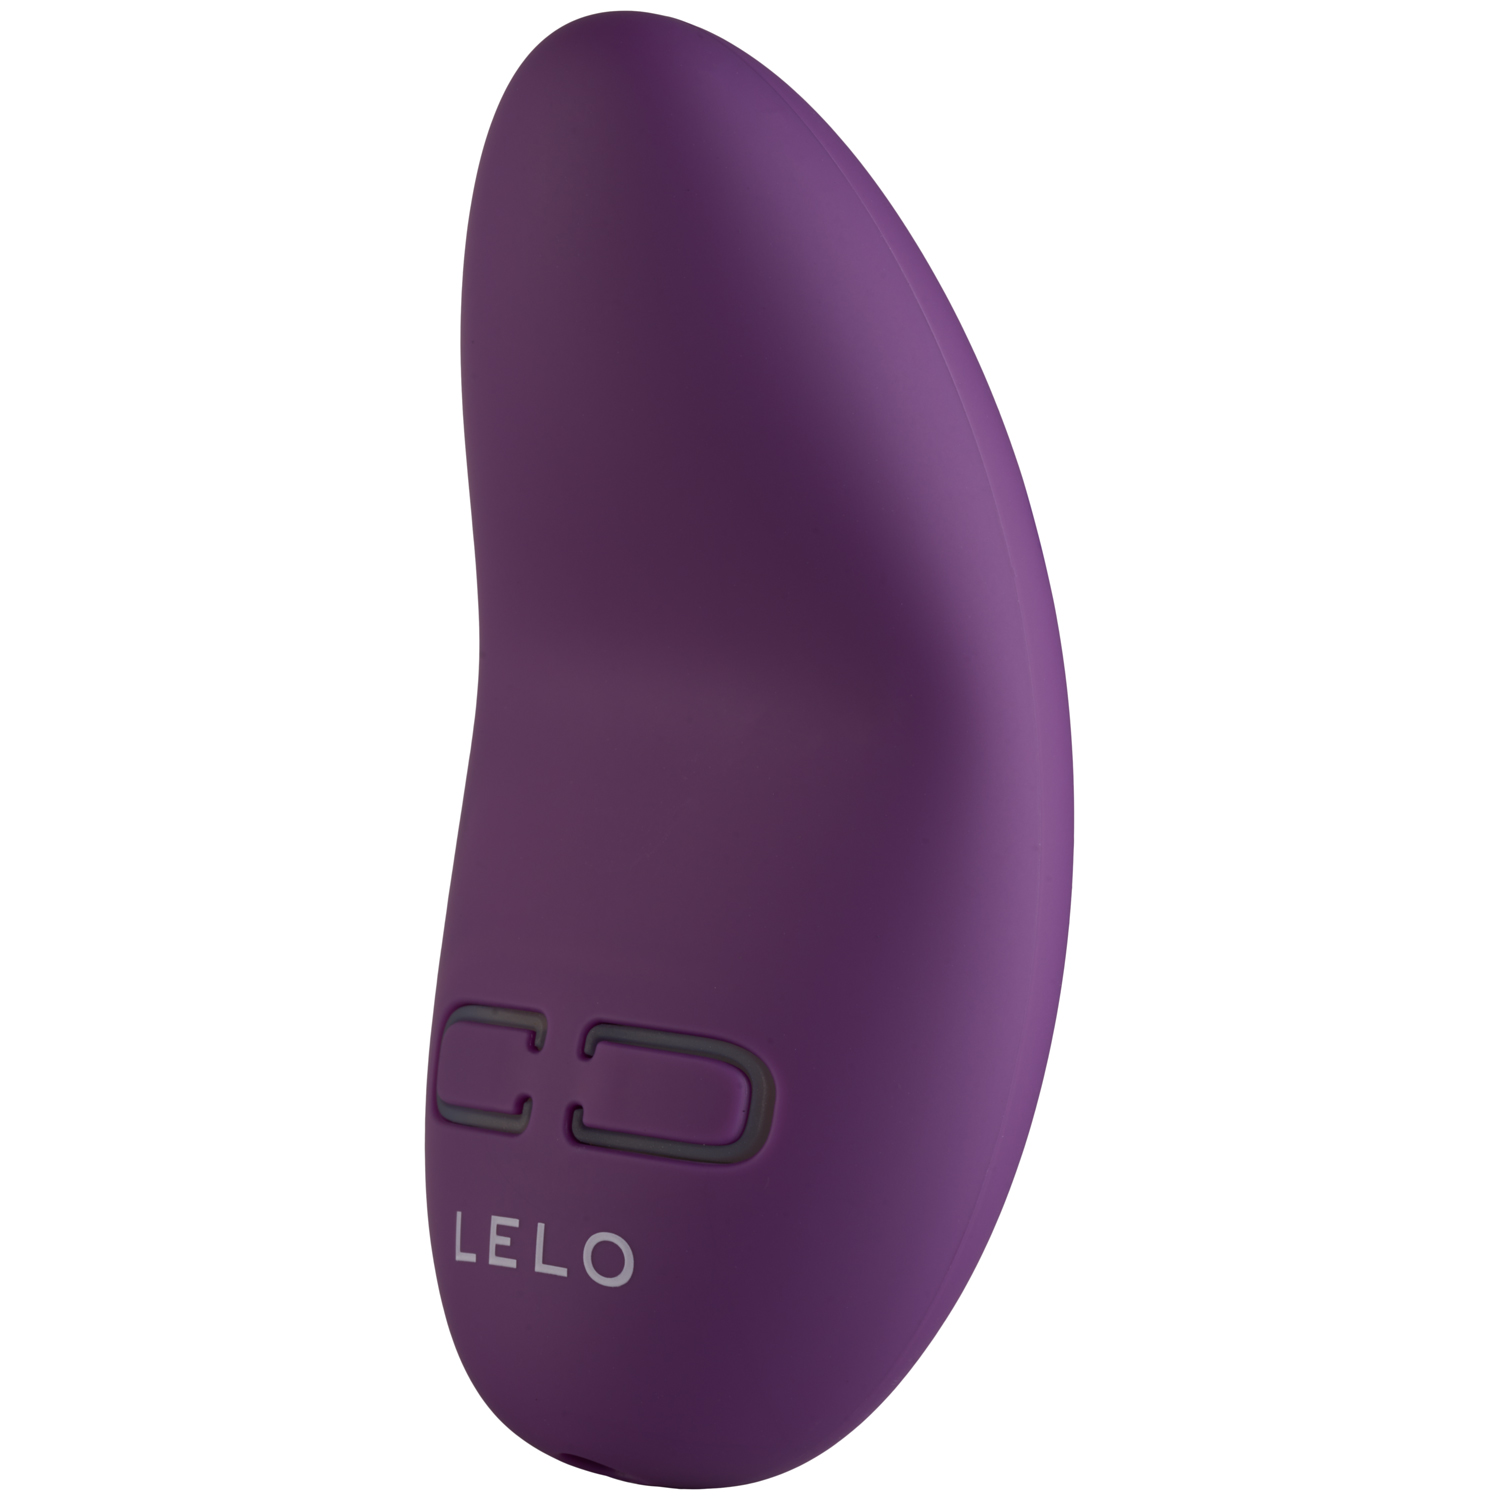 LELO Lily 3 Personal Massager - Purple